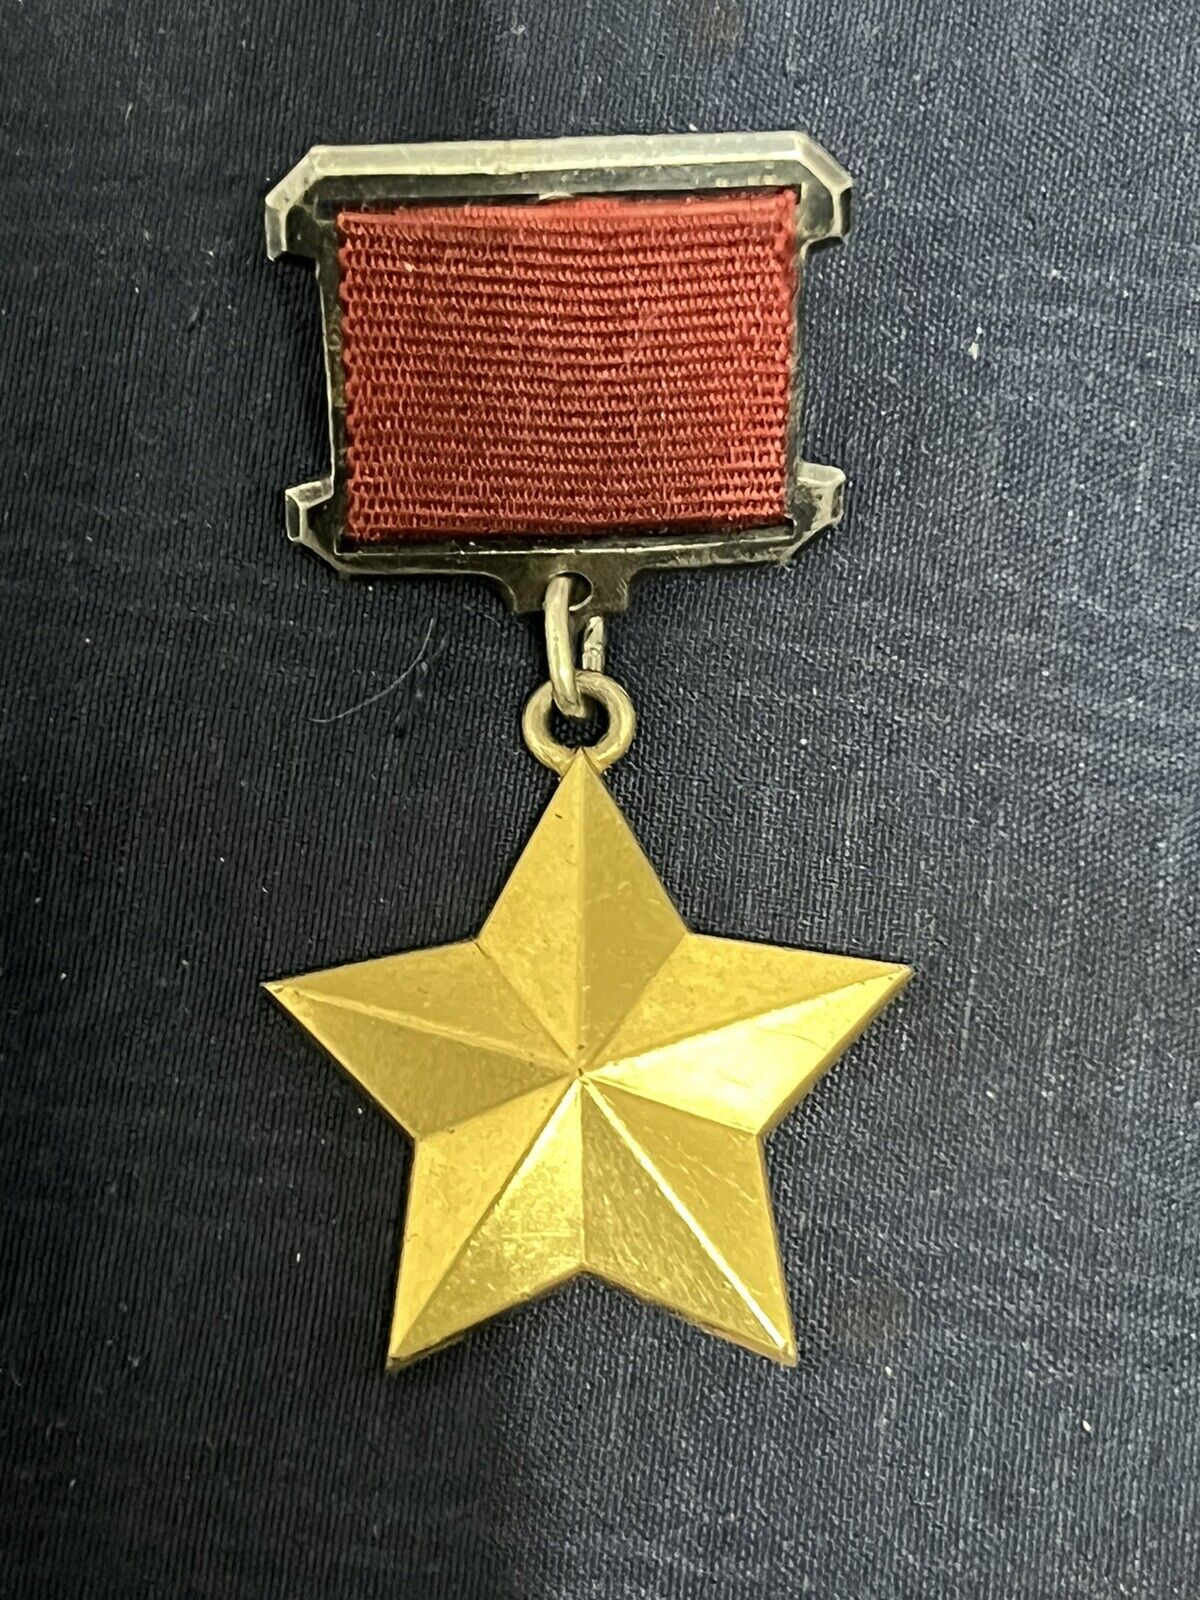 WW II GOLD  STAR  MEDAL HERO OF SOVIET UNION # 1203 Award to SHELEPOV PETR